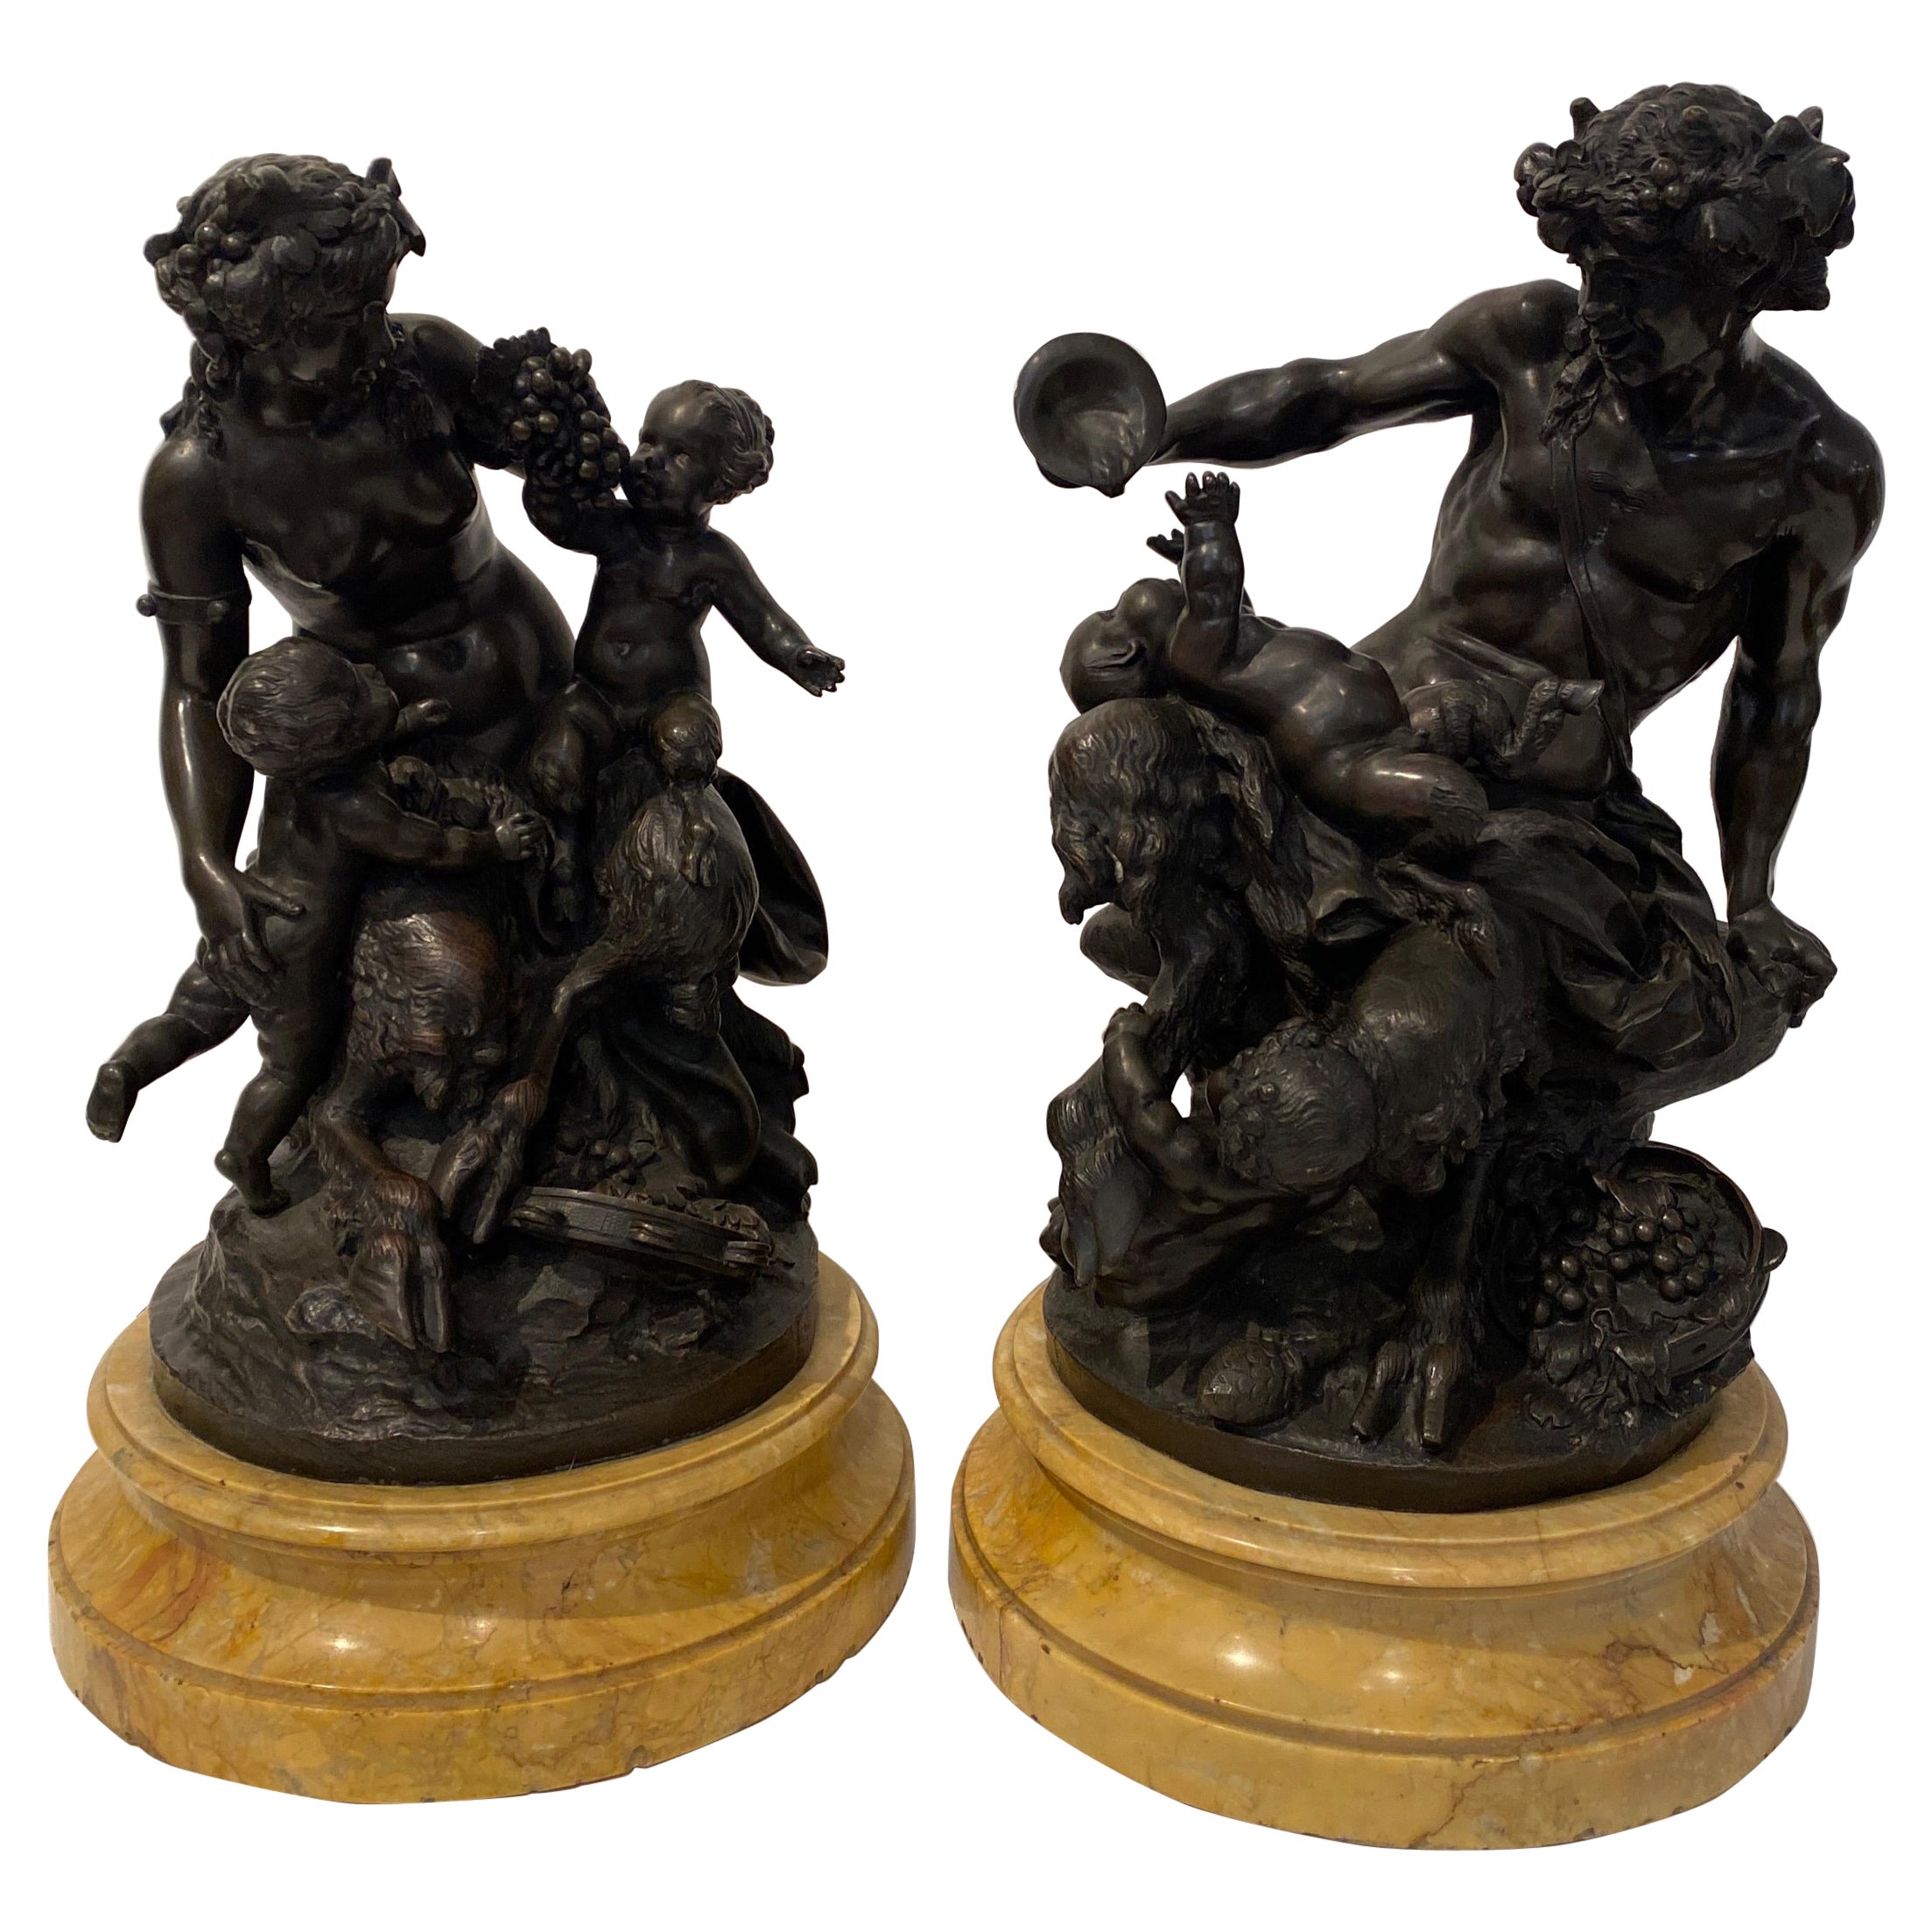 Pair of Magnificent Patinated Bronze Sculptures After Clodian